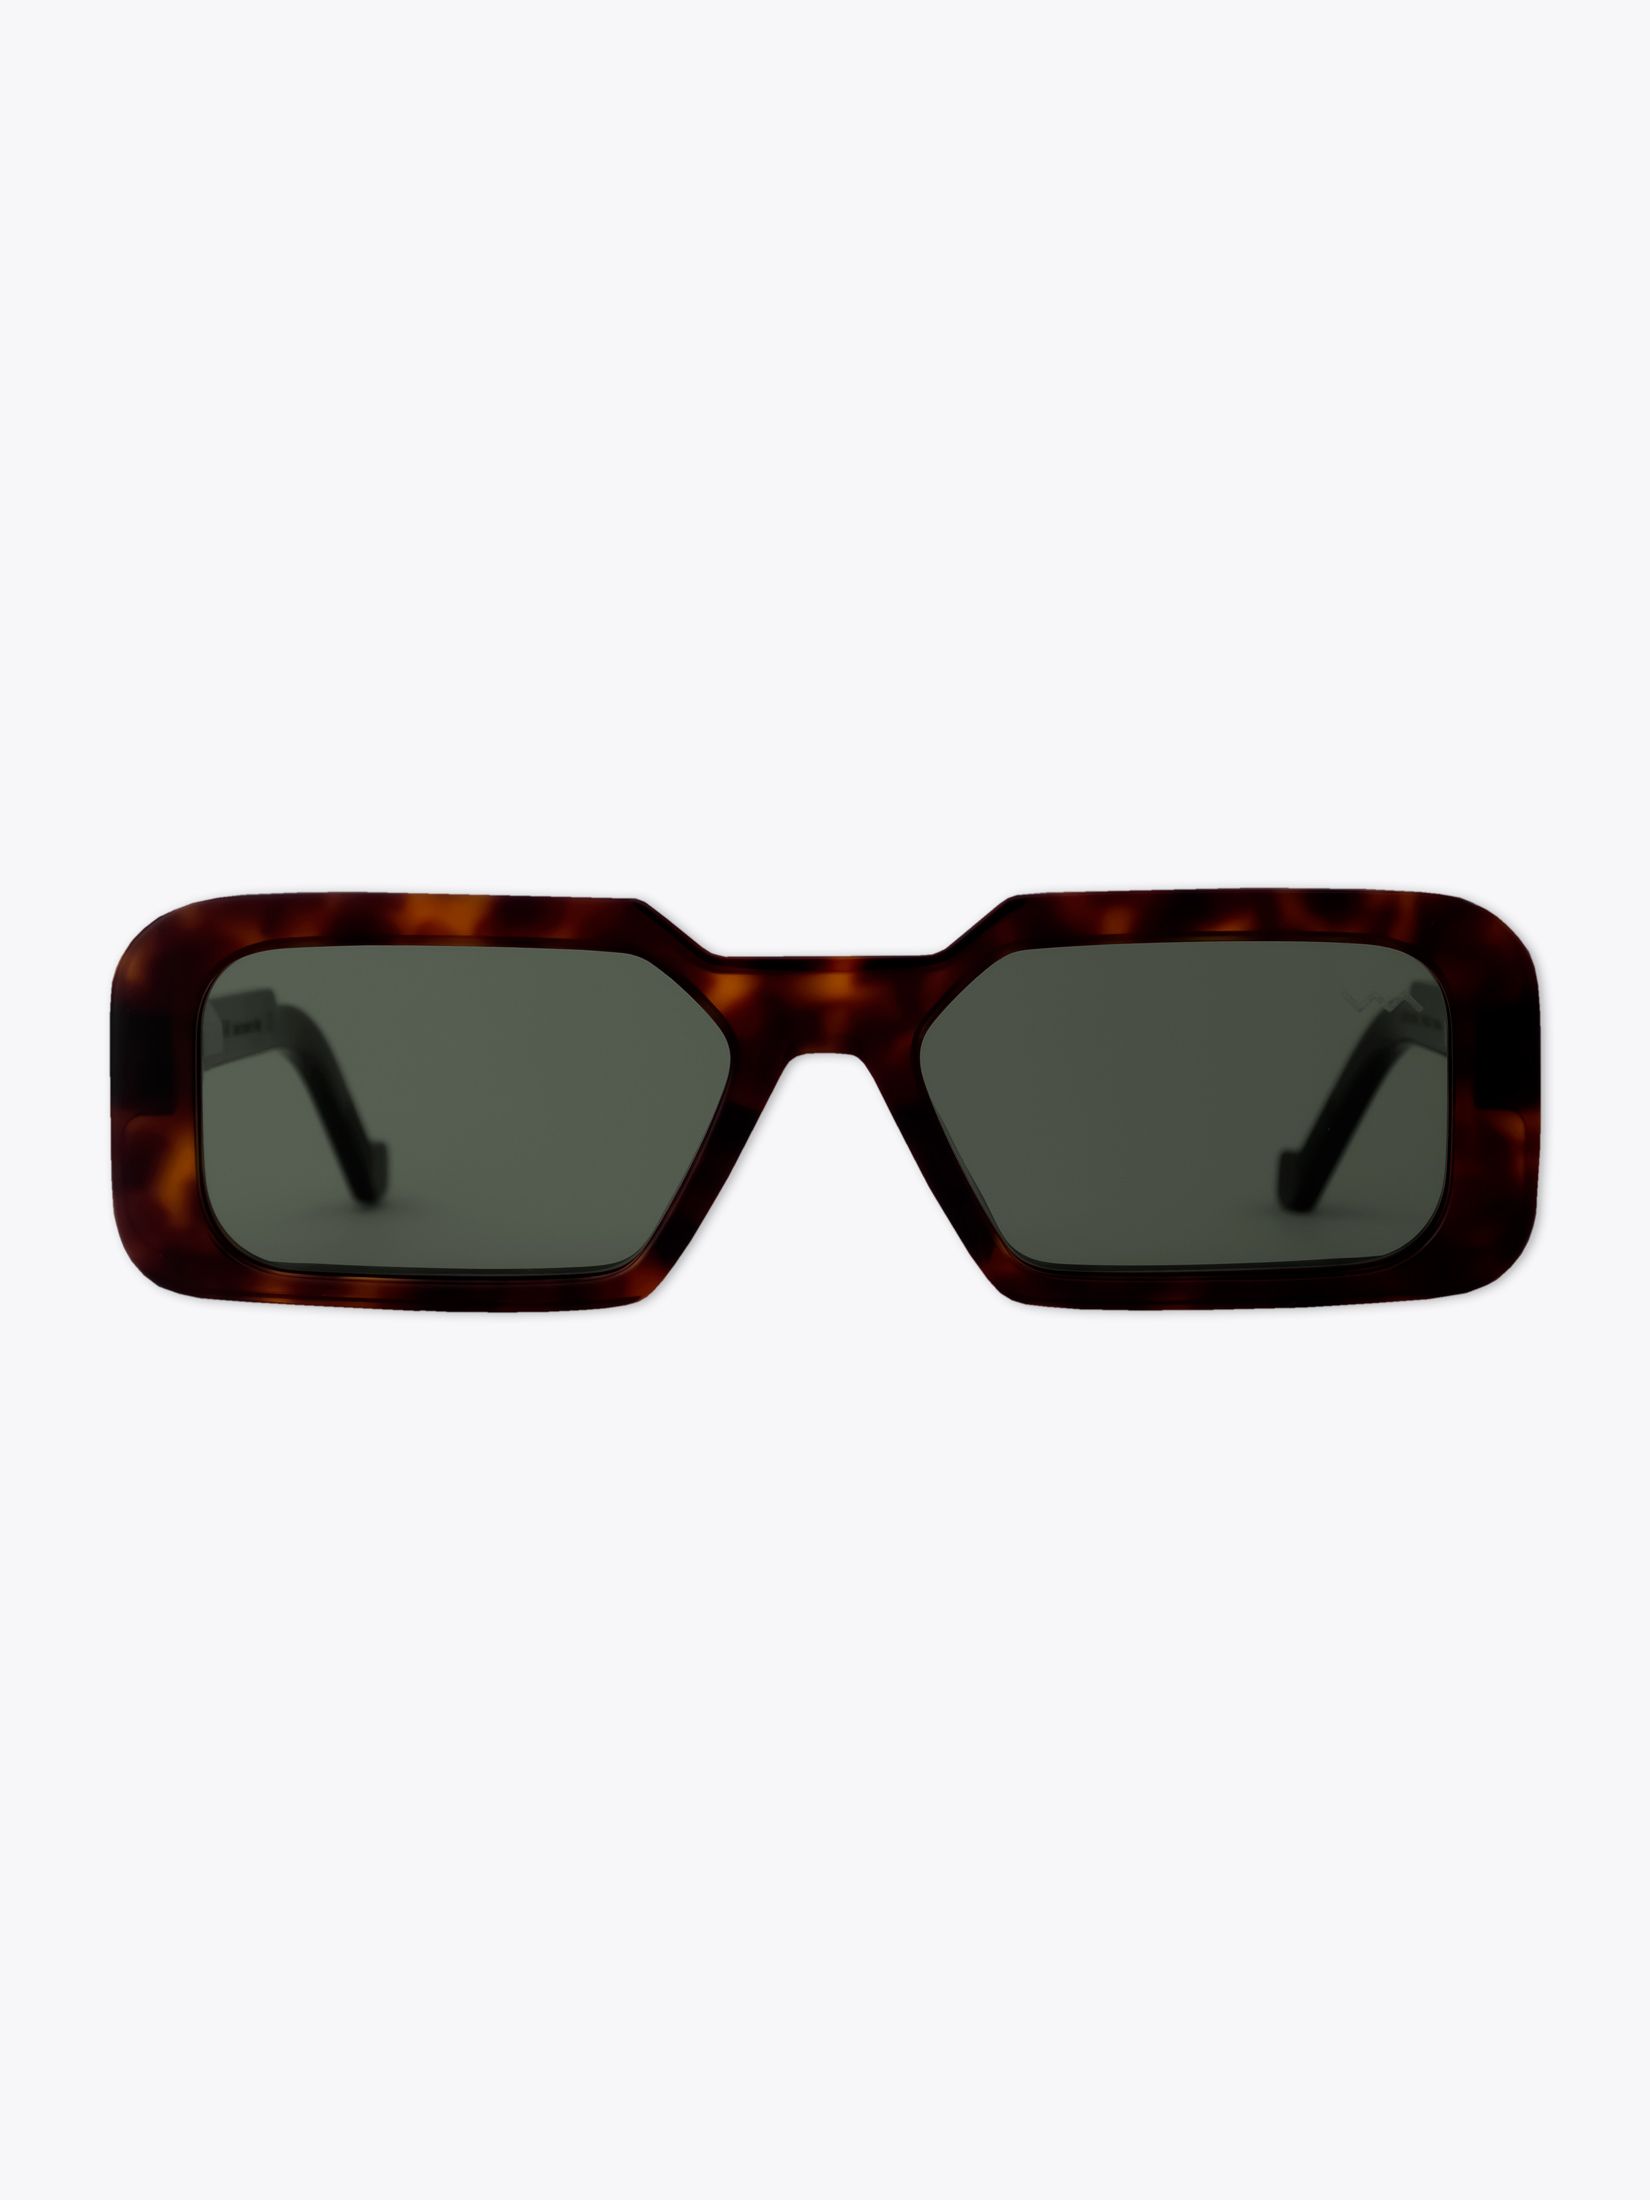 50% Off Vava Eyewear WL0053 Havana Sunglasses - E35 Shop